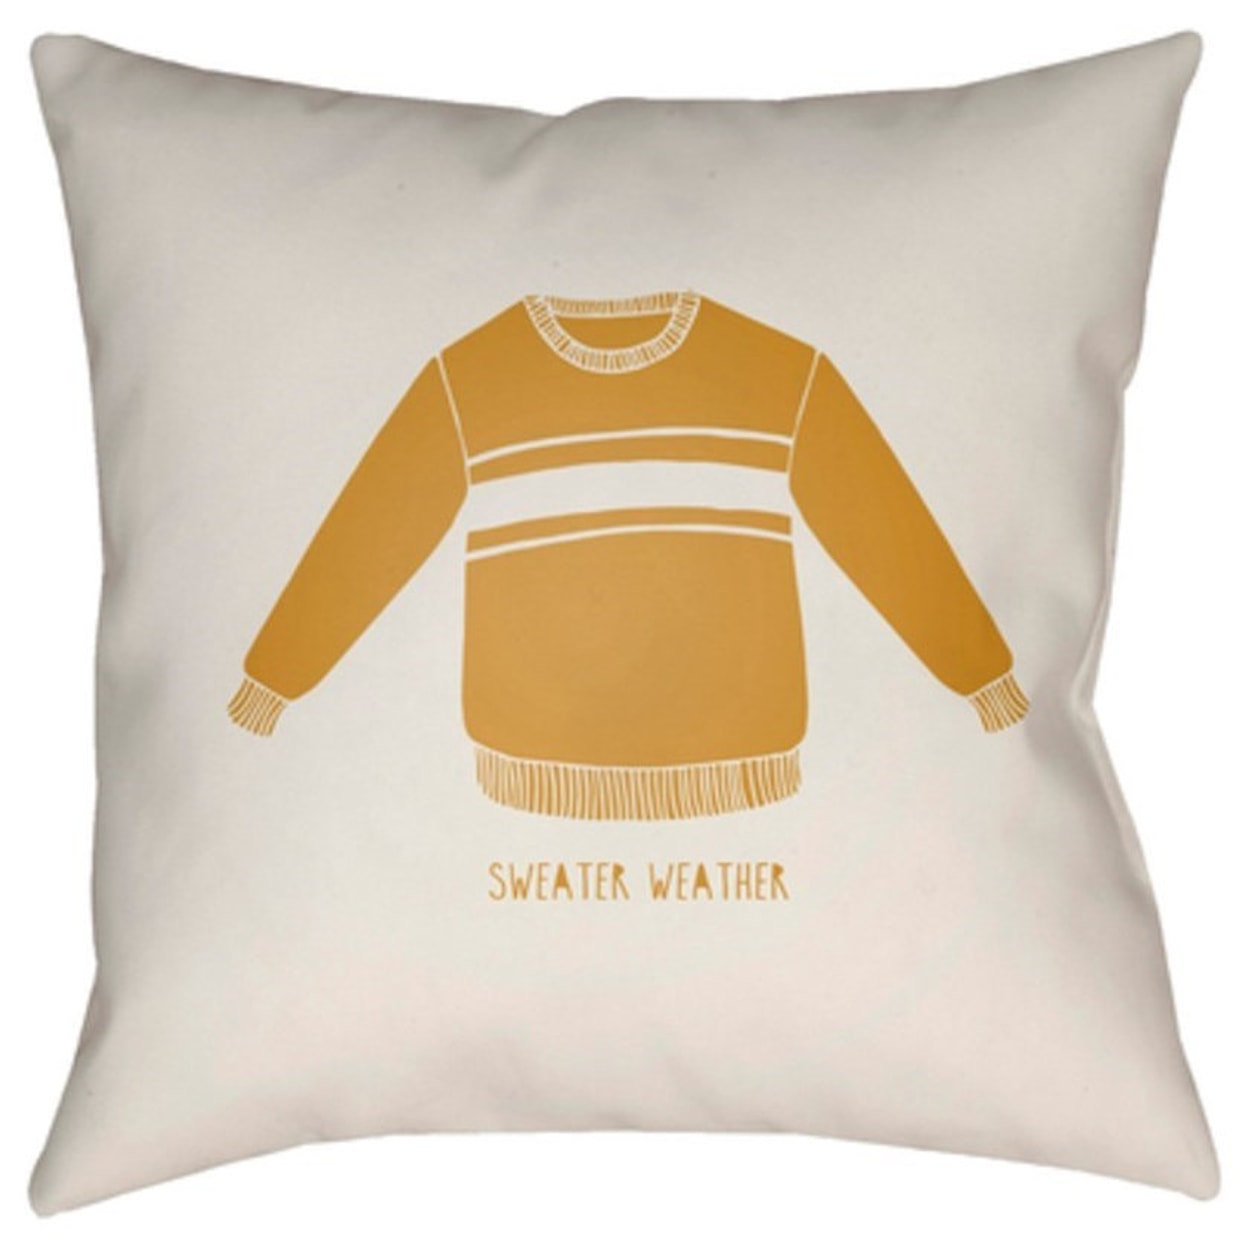 Surya Sweater Weather Pillow